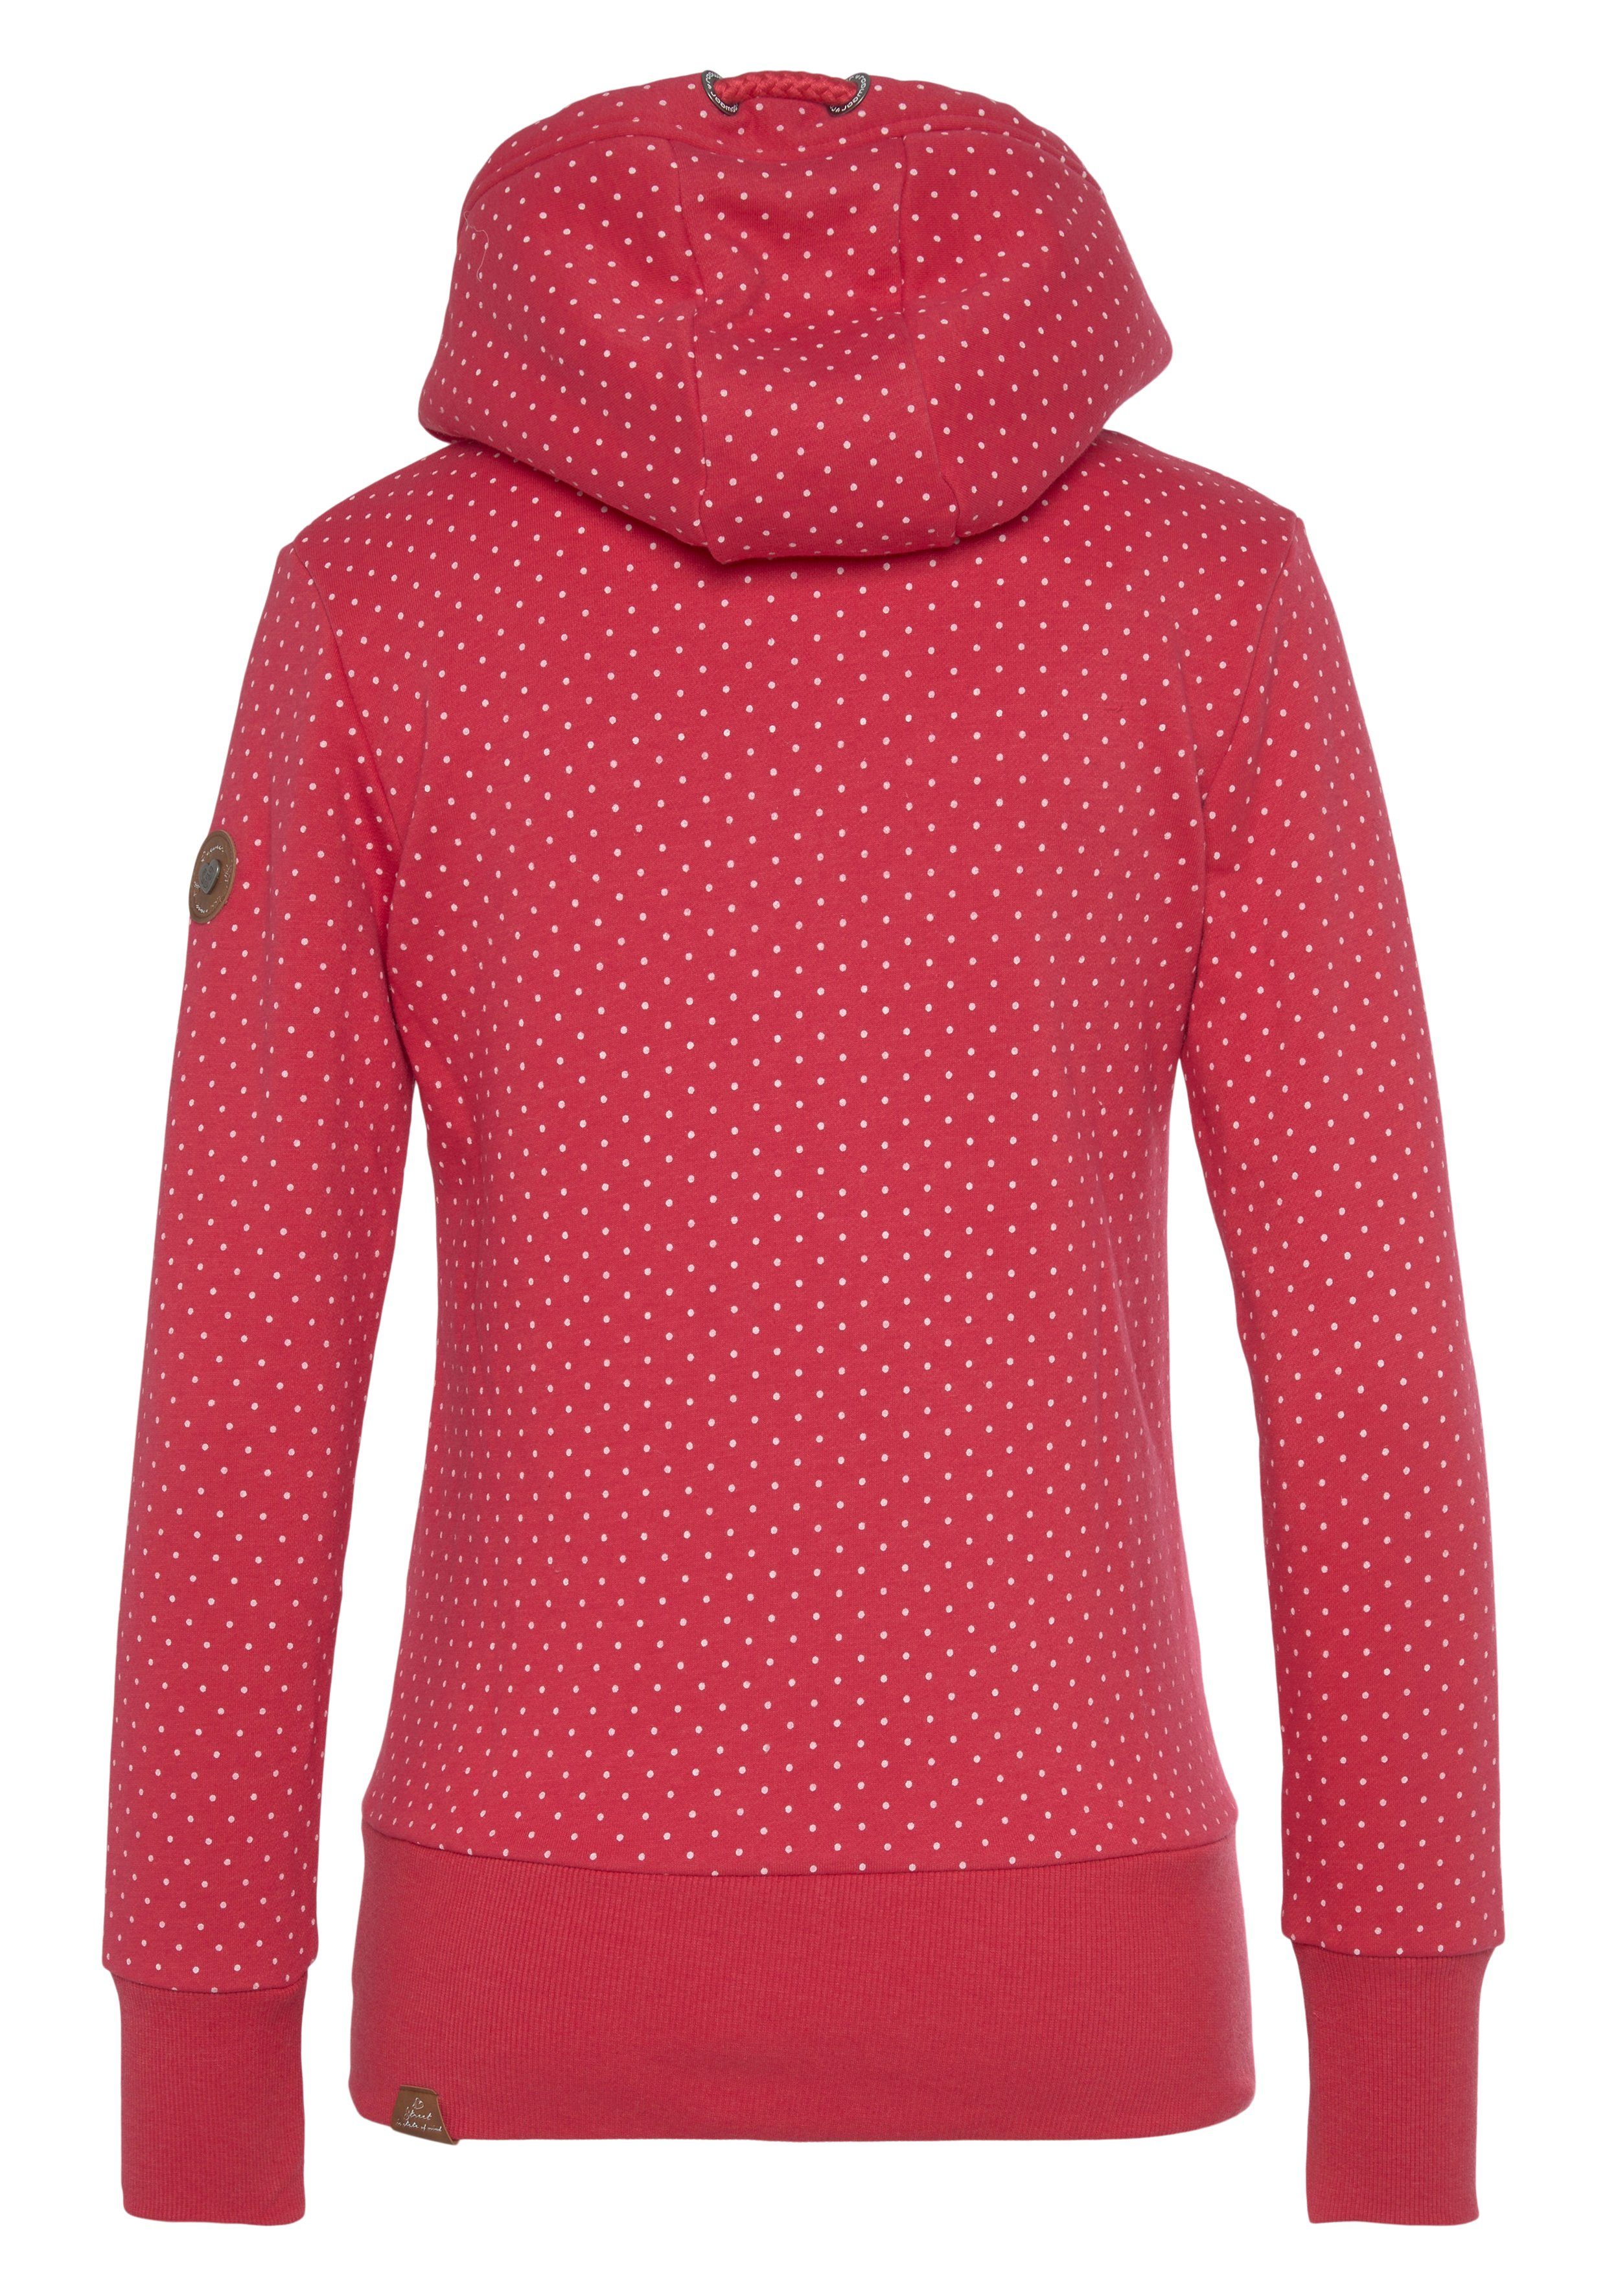 NESKA im O Sweatjacke red ZIP Allover-Dots Ragwear DOTS Design 4000 Print